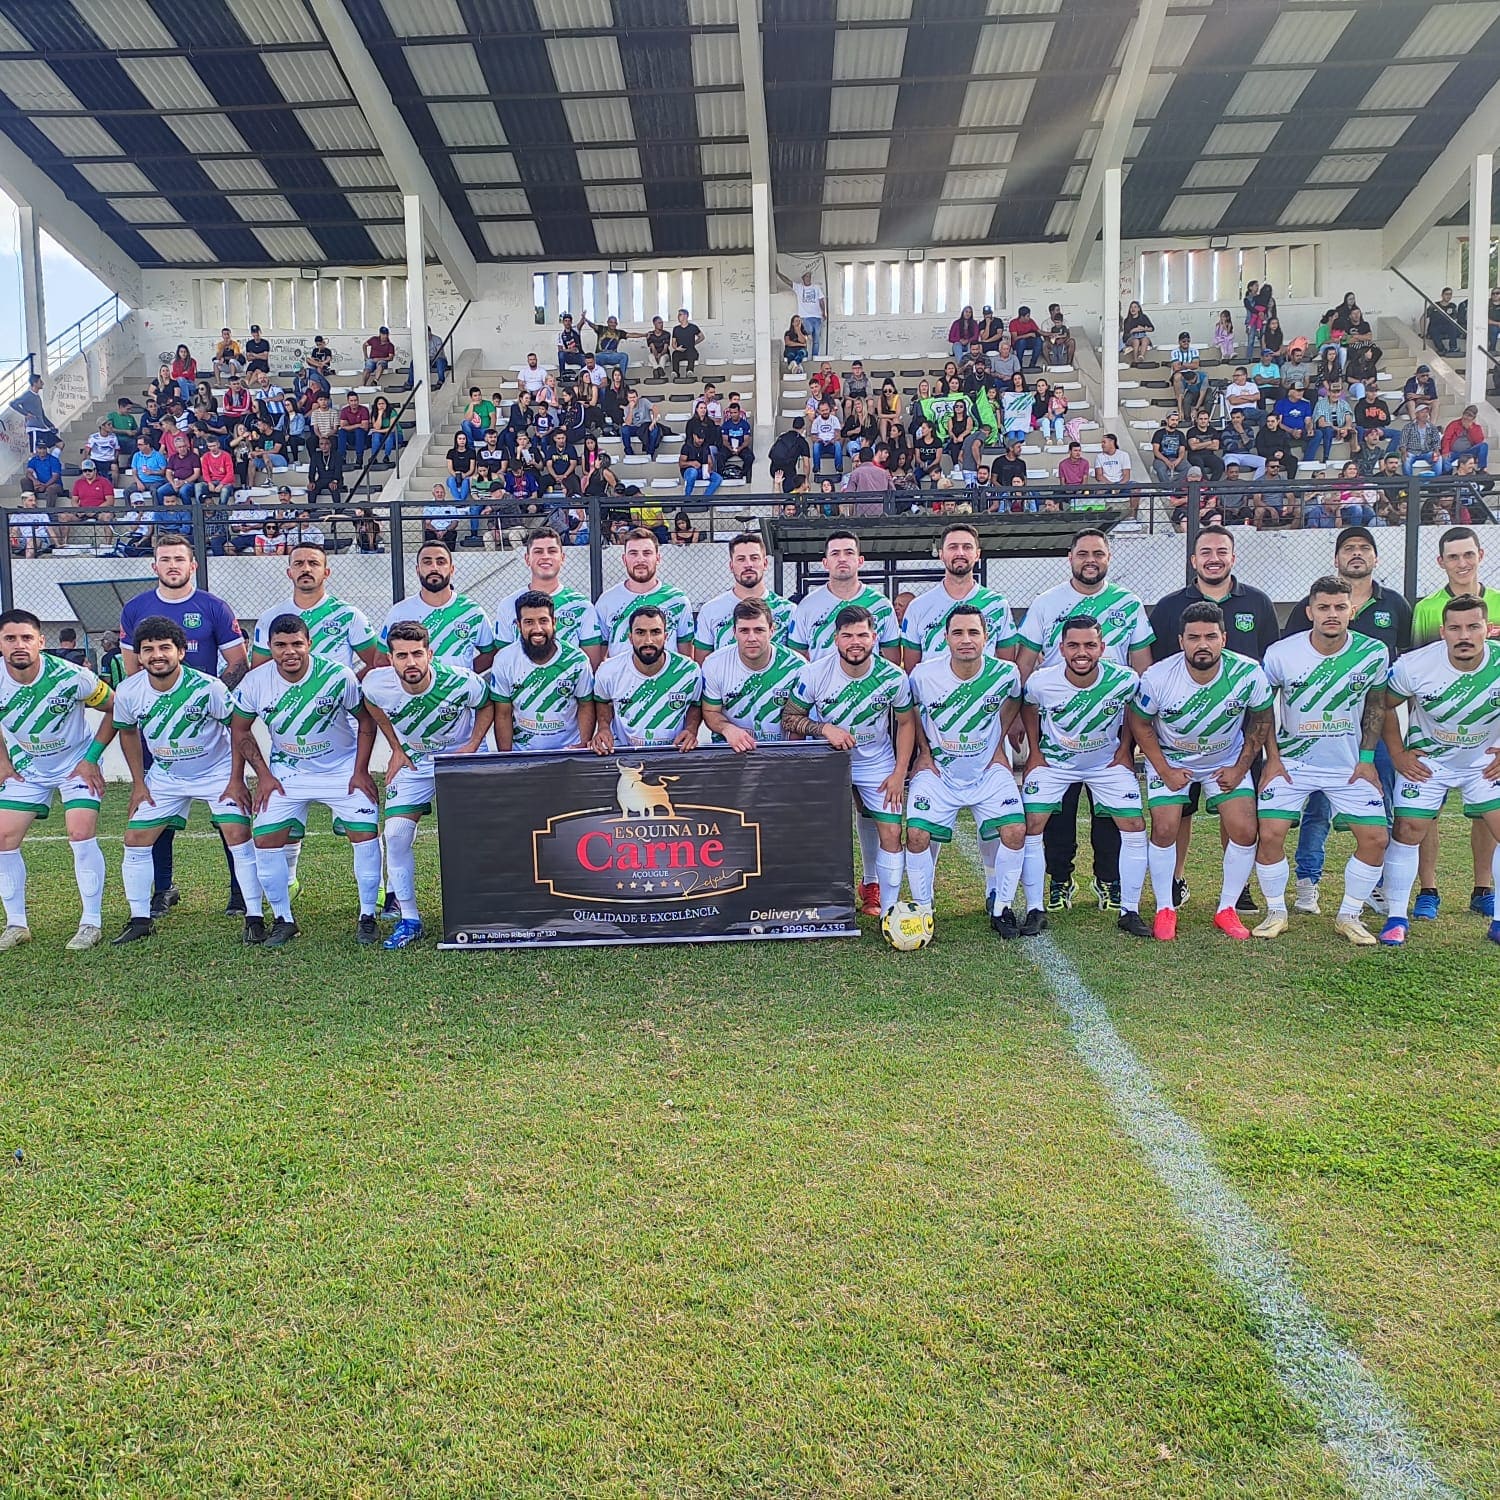 CEC Sapo vence clássico local e garante vaga na final do Campeonato Castrense de Futebol